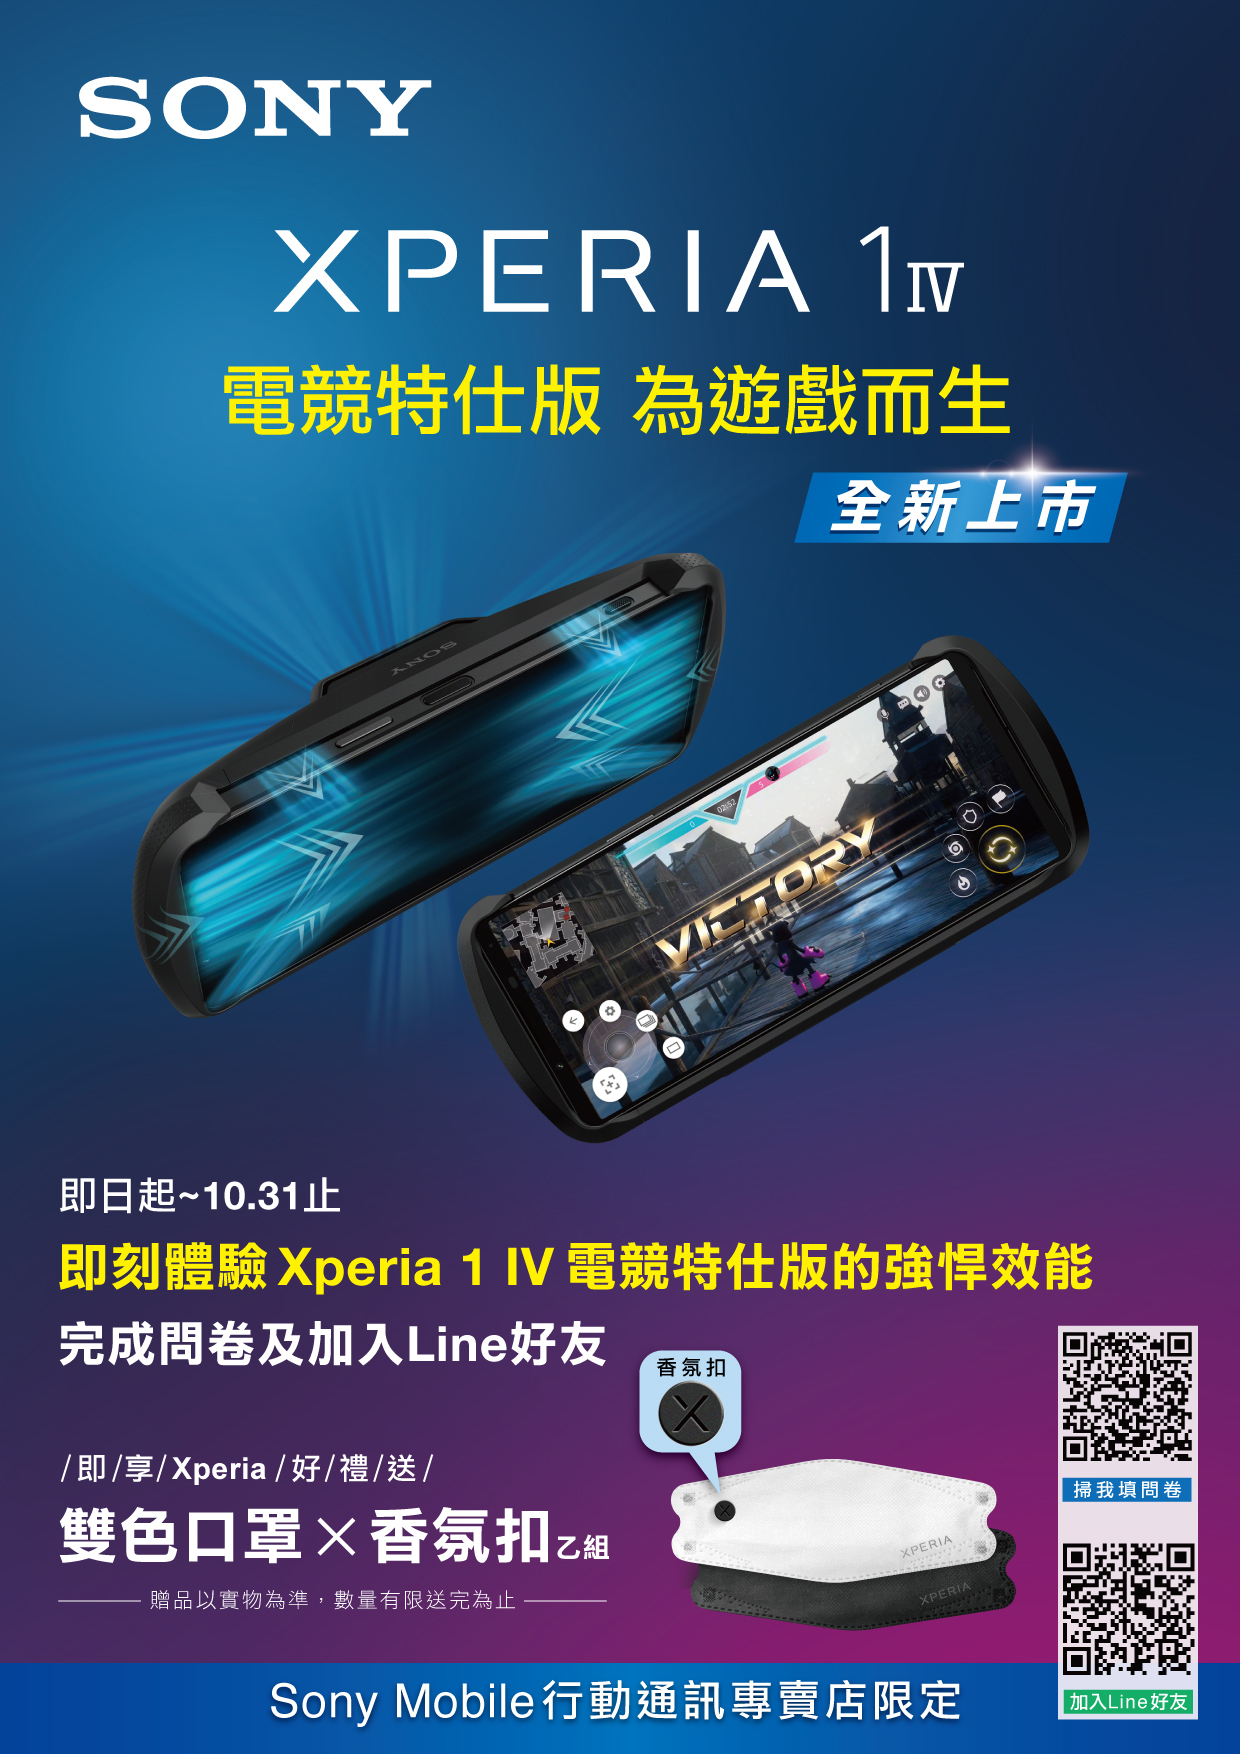 Sony Mobile Xperia 1 IV Gaming Edition 電競特仕版今日在台上市- 巴